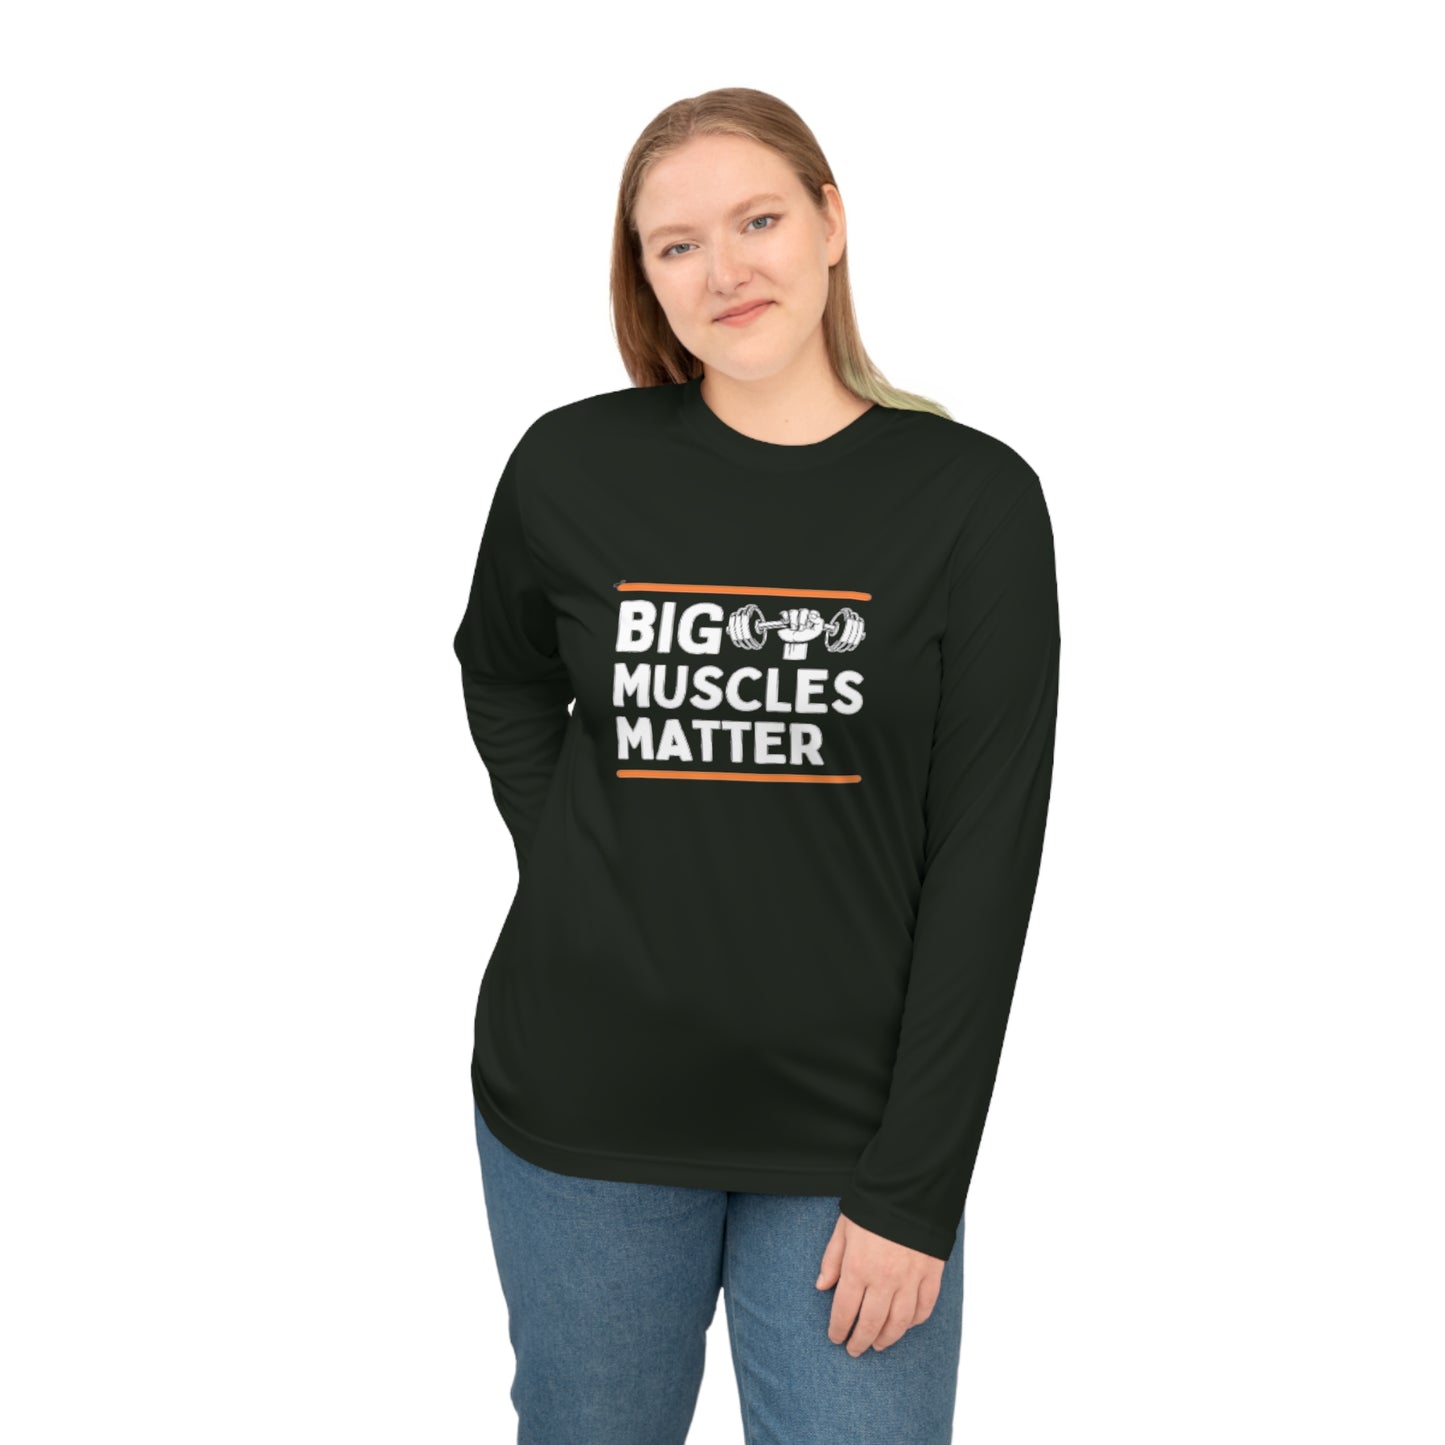 Big Muscles Matter Unisex Dry Fit Performance Long Sleeve Shirt